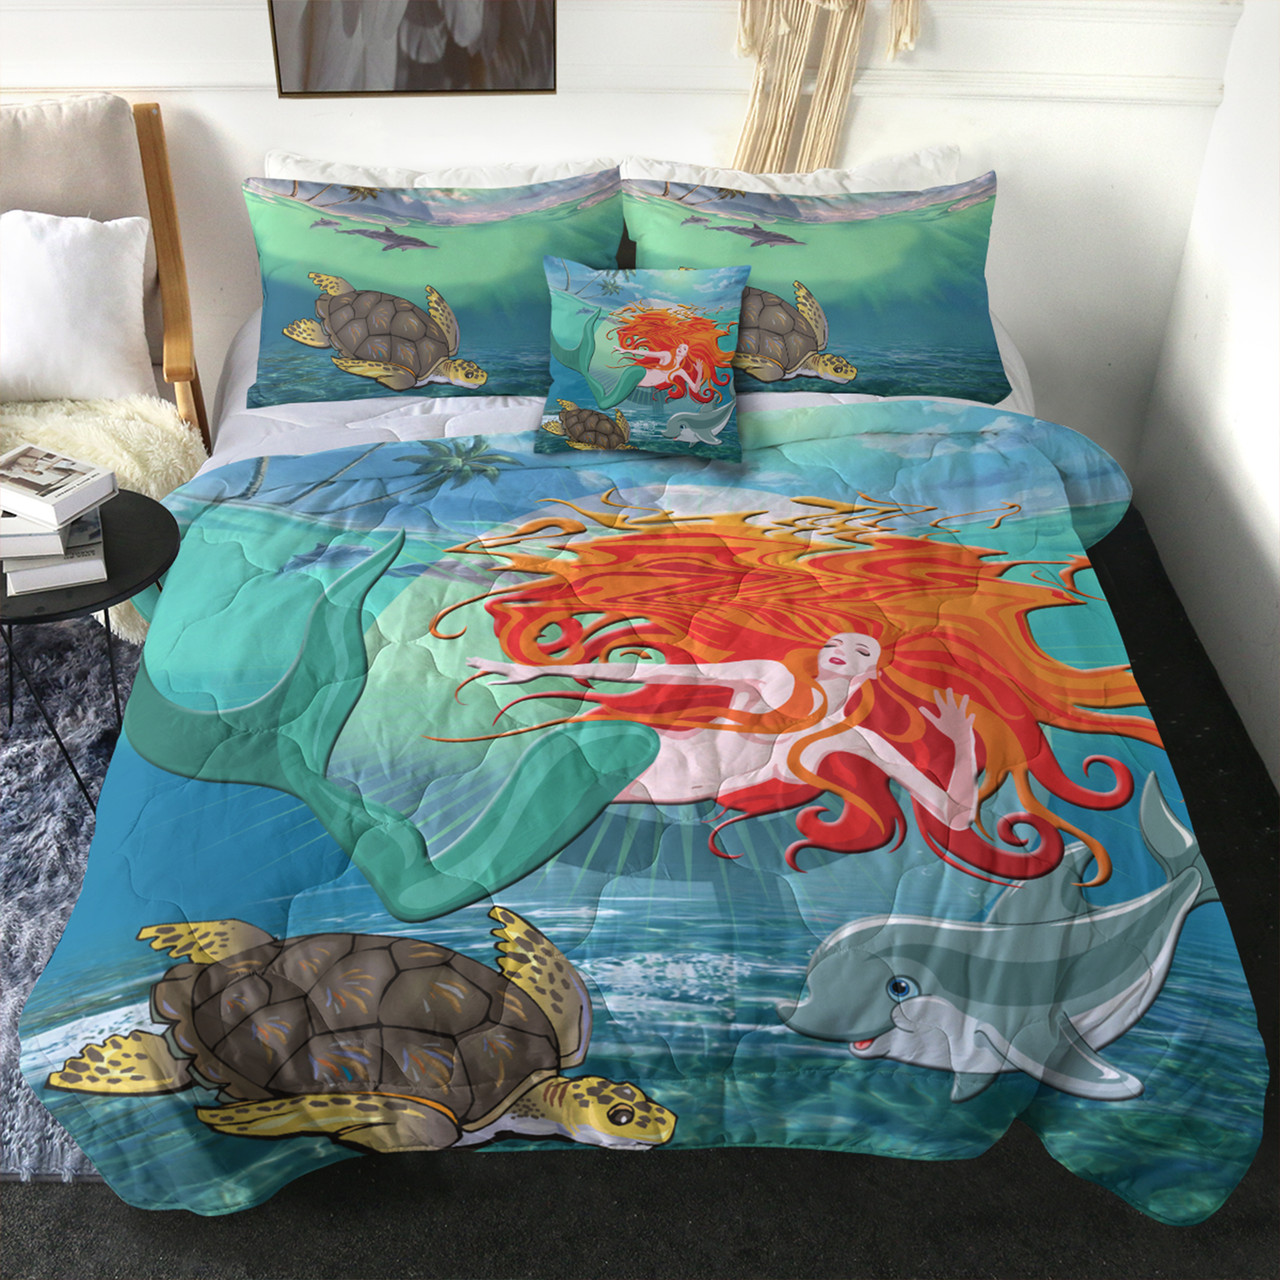 Hawaii Comforter Mermaid And Animal